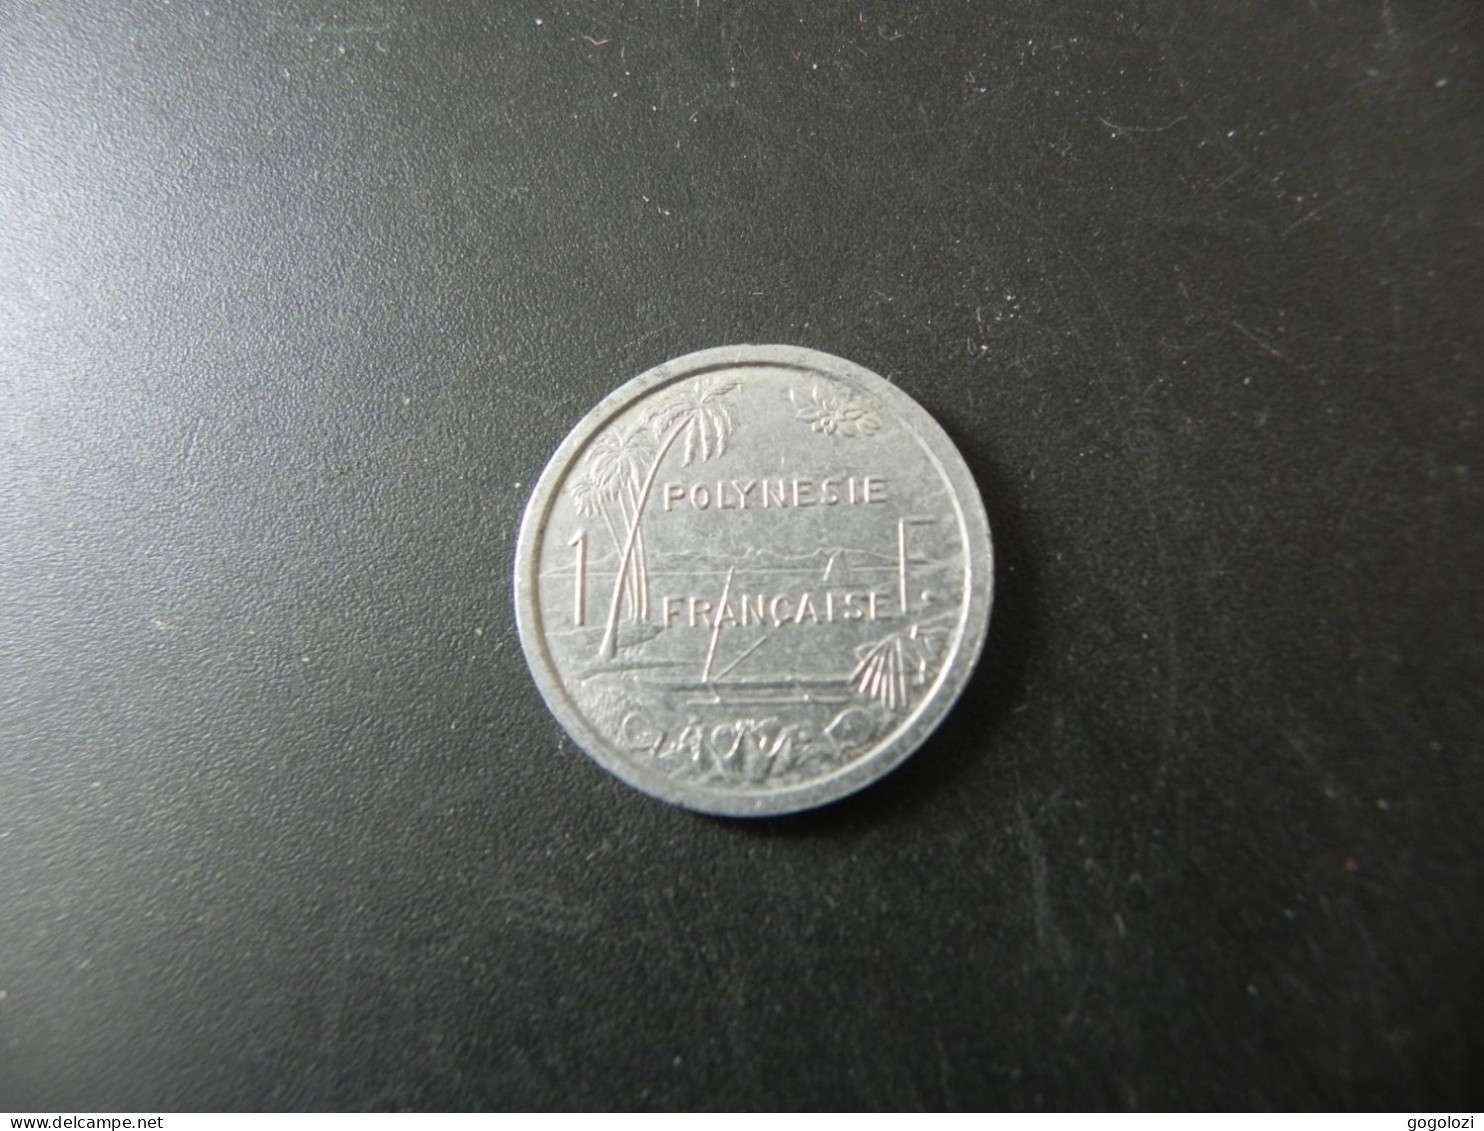 Polynesie Française 1 Franc 1987 - Polinesia Francesa